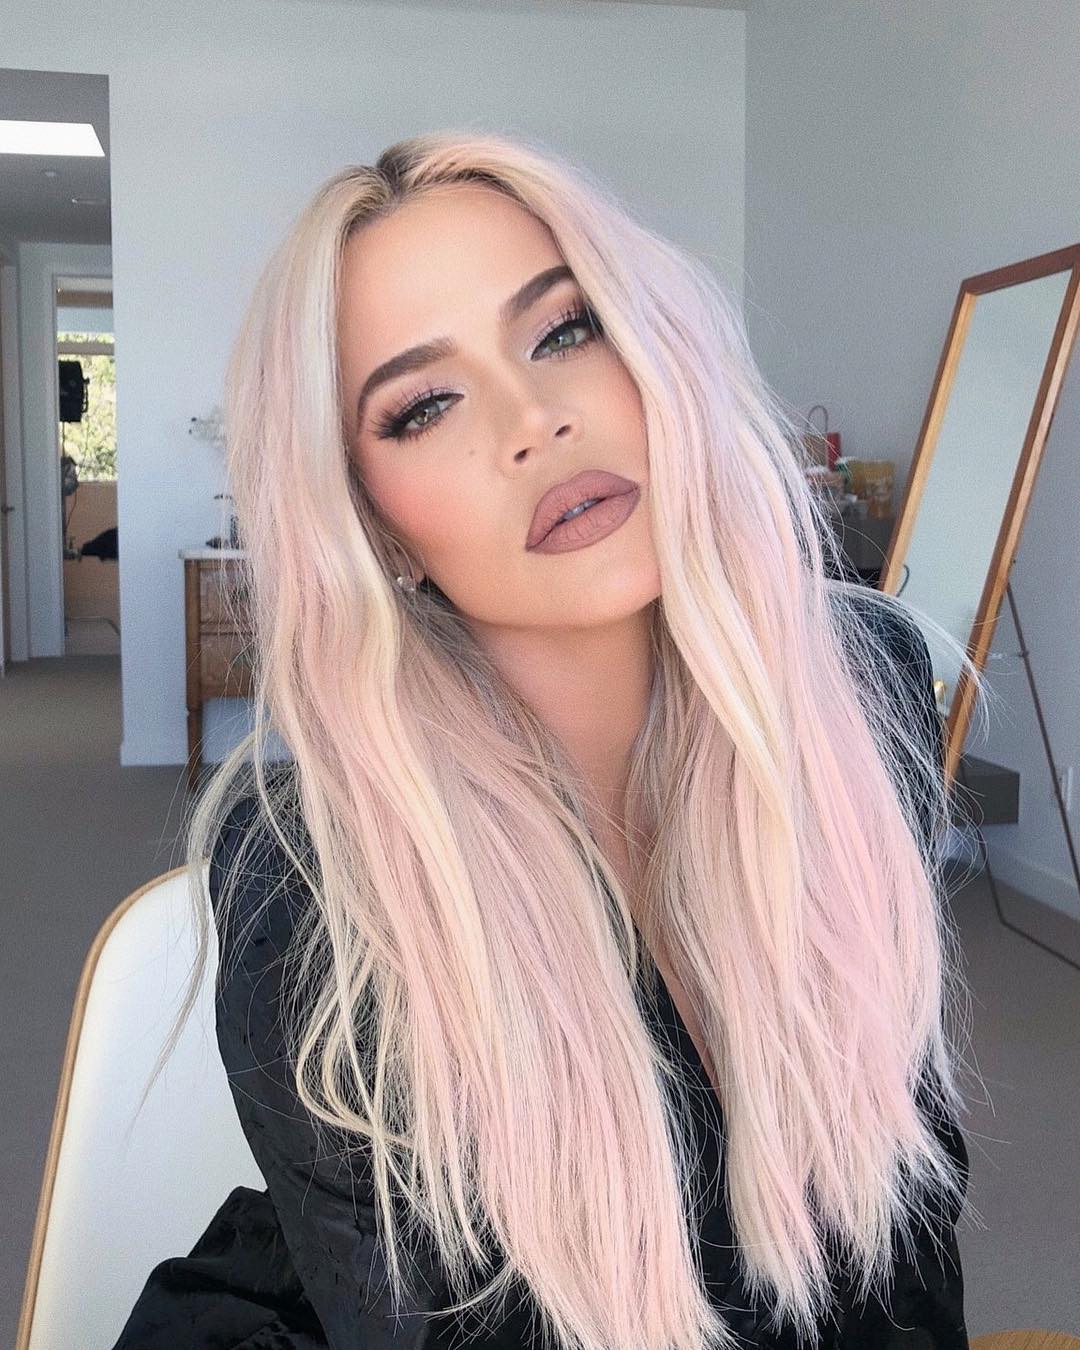 Khloe Kardashian's Pink Hair with L'Oreal Paris Color: Details